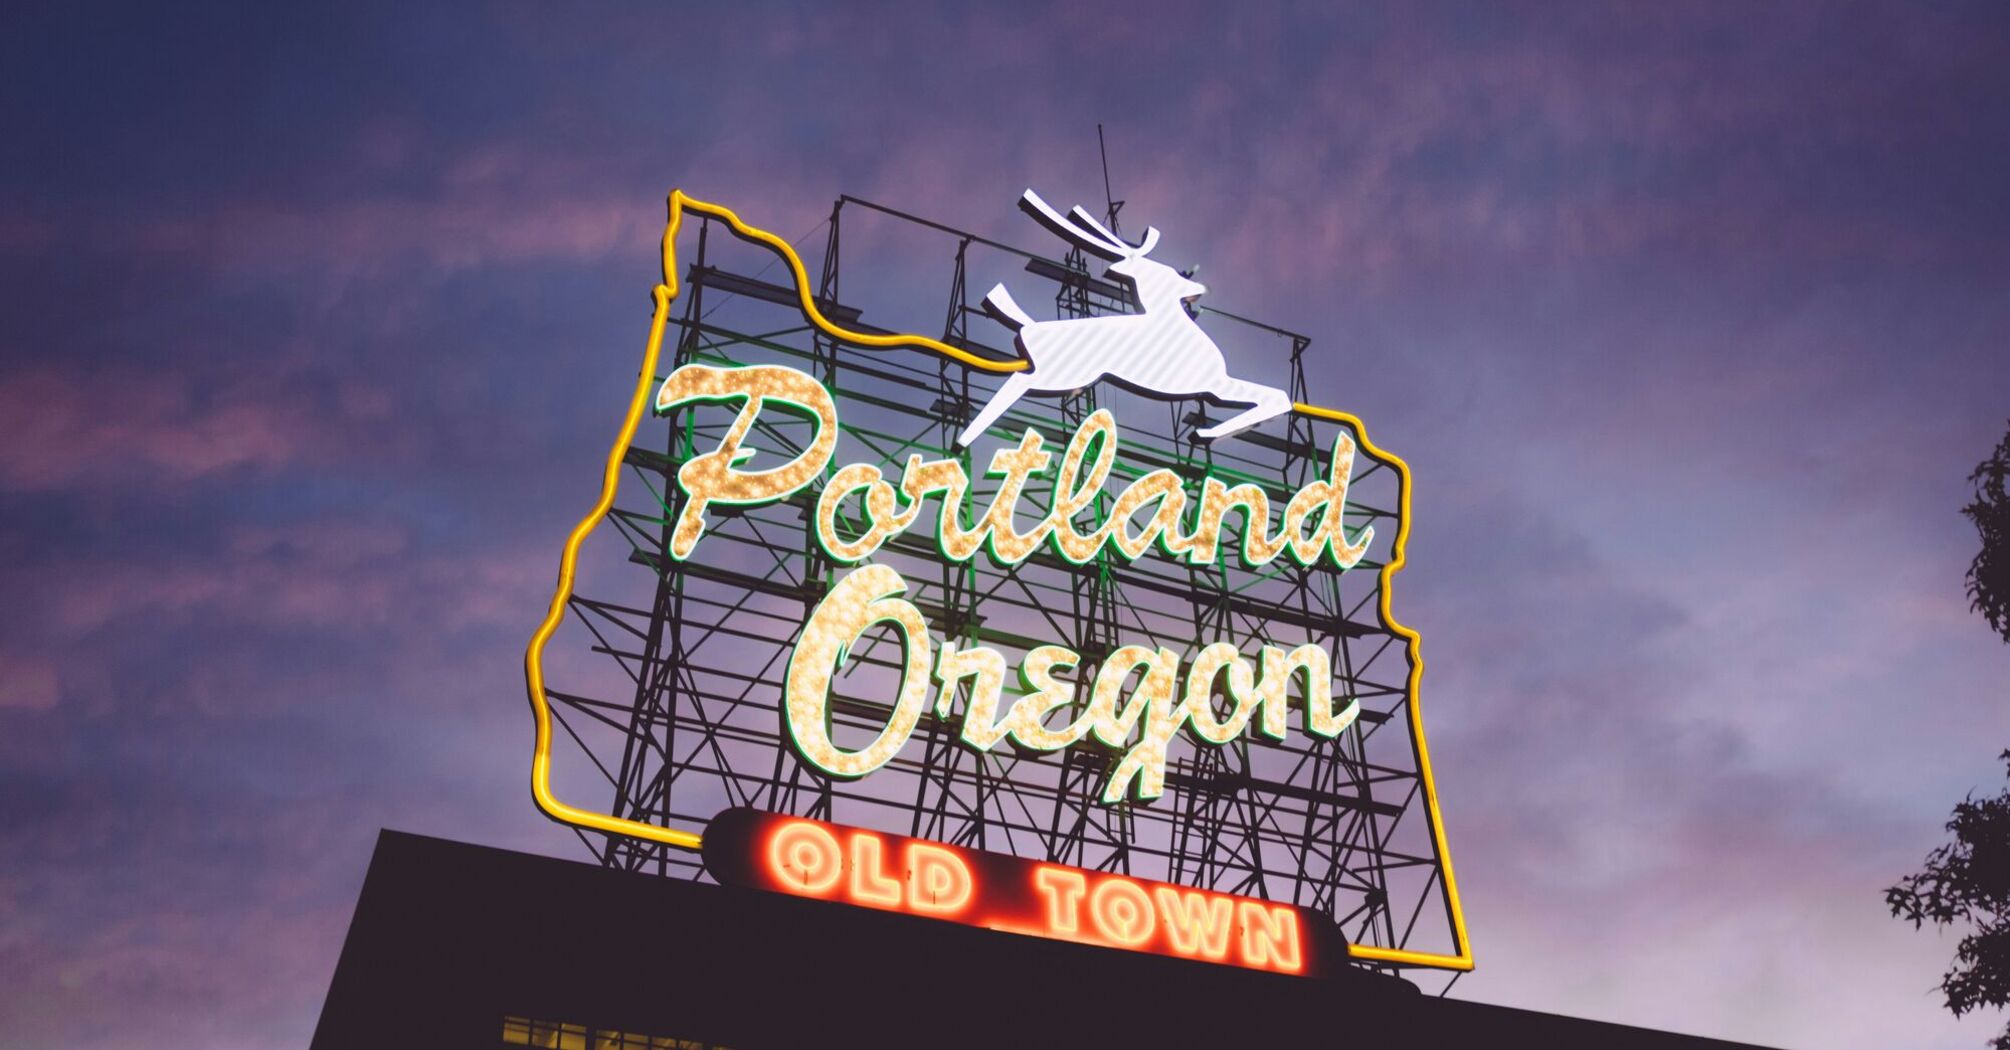 The iconic Portland Oregon Old Town neon sign illuminated at twilight